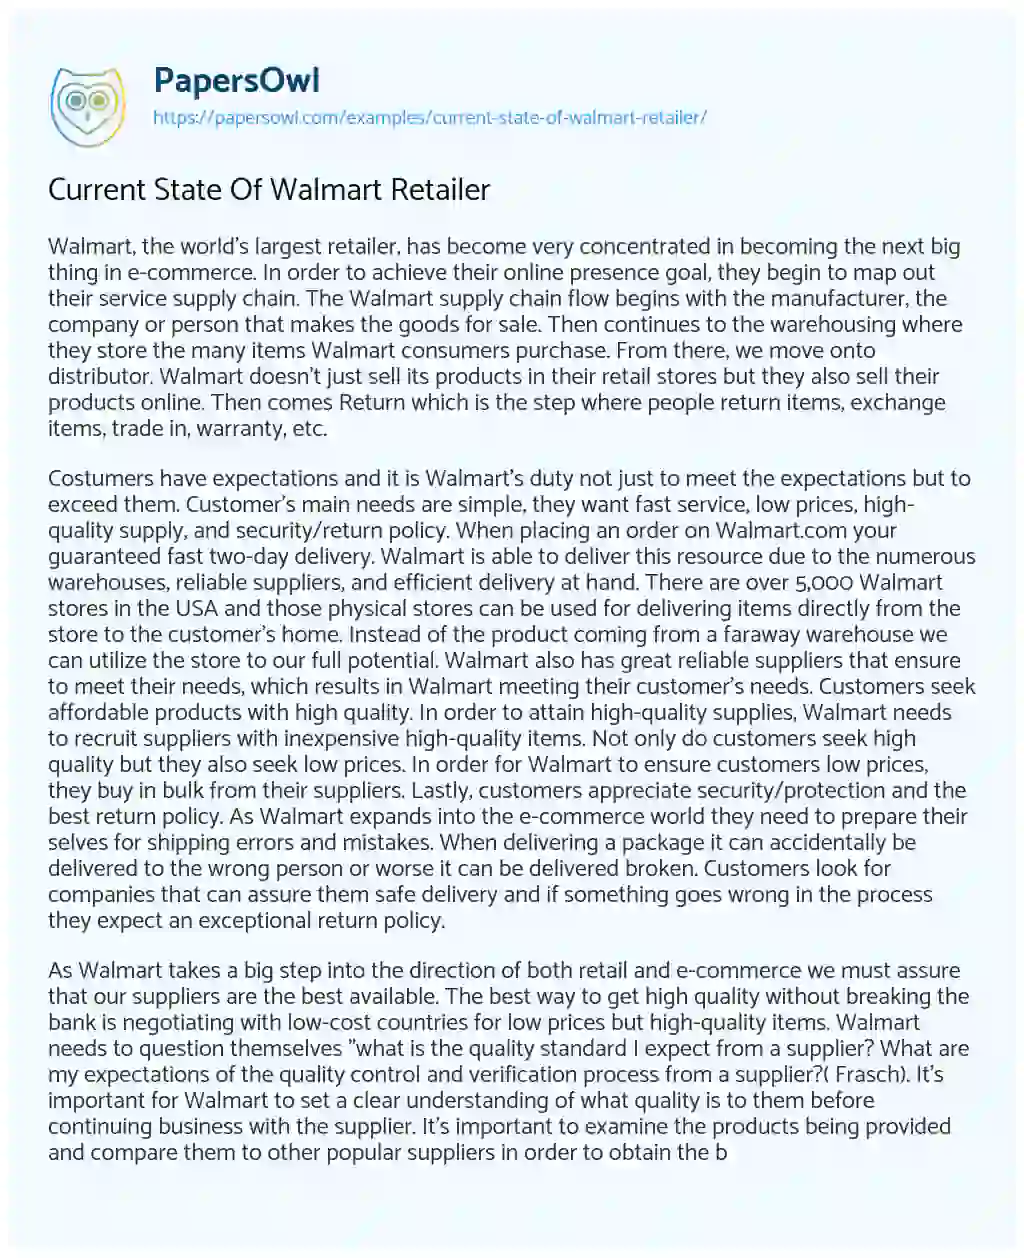 Essay on Current State of Walmart Retailer